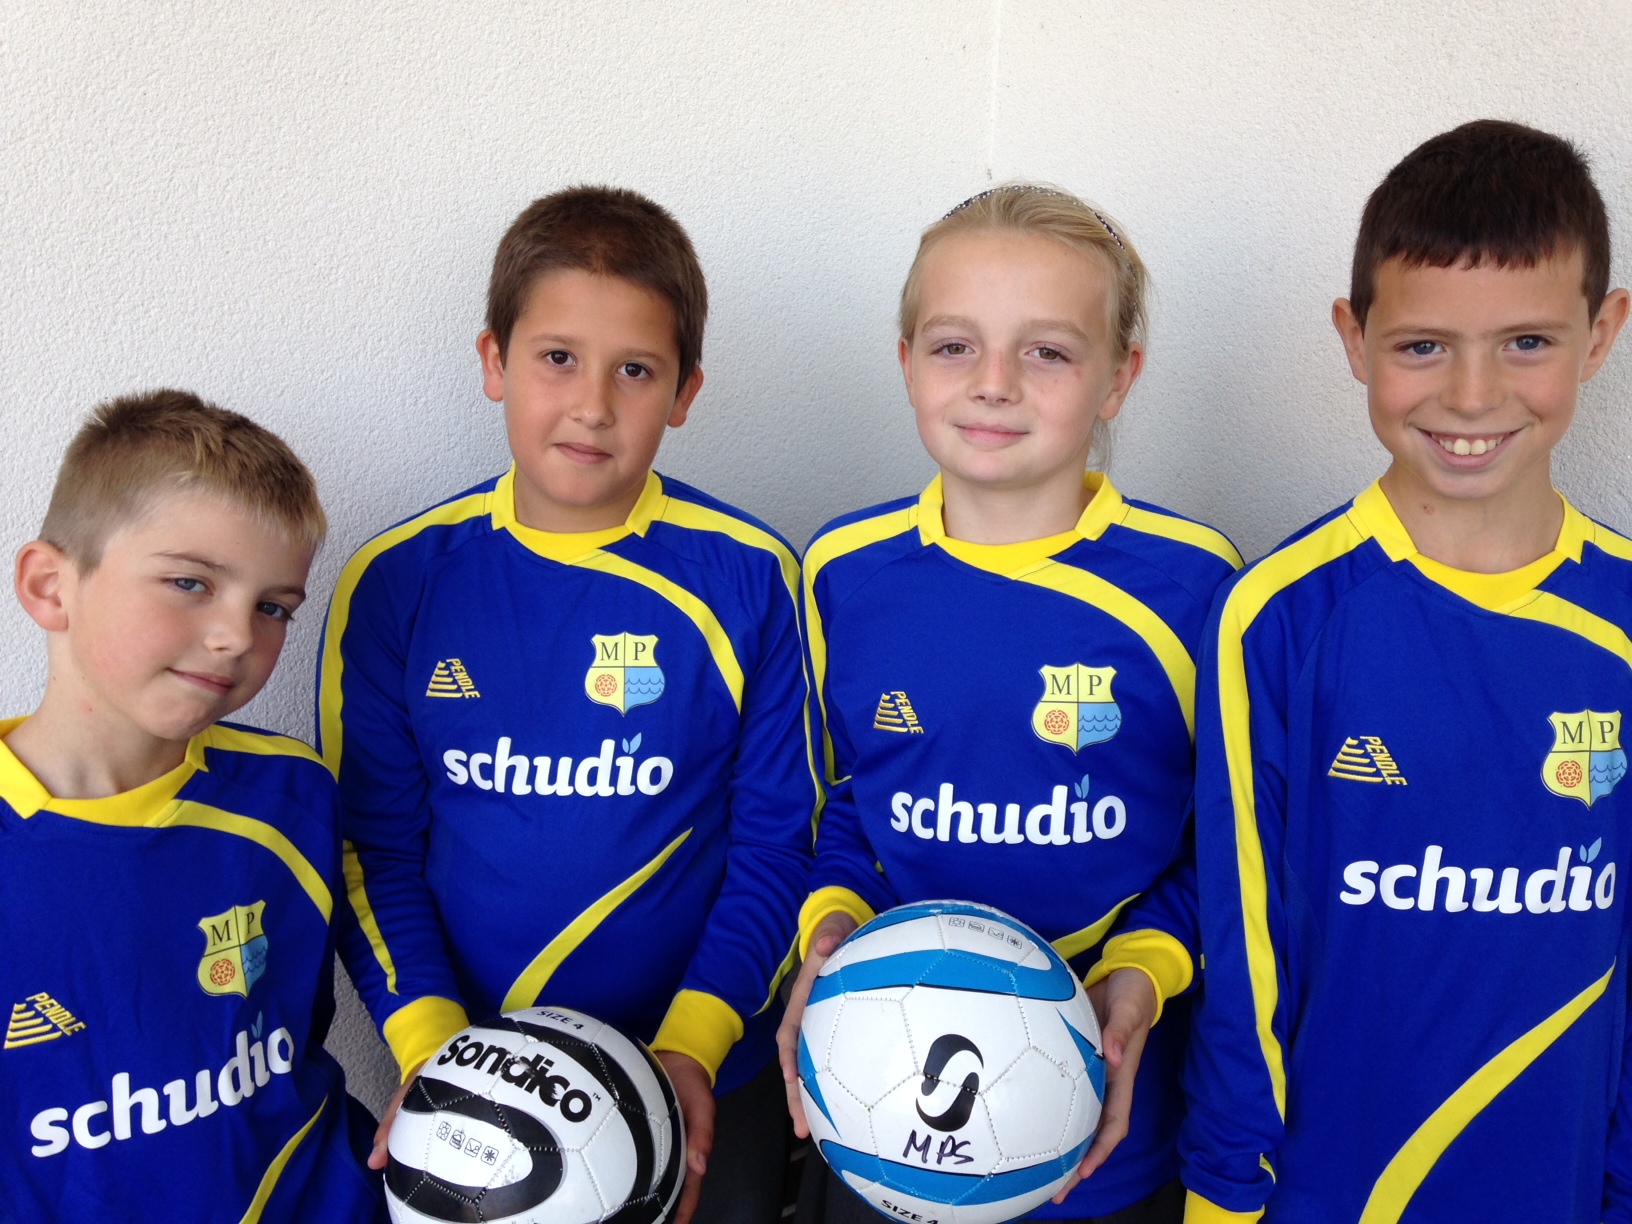 Mereside Football Team - Sponsored by Schudio